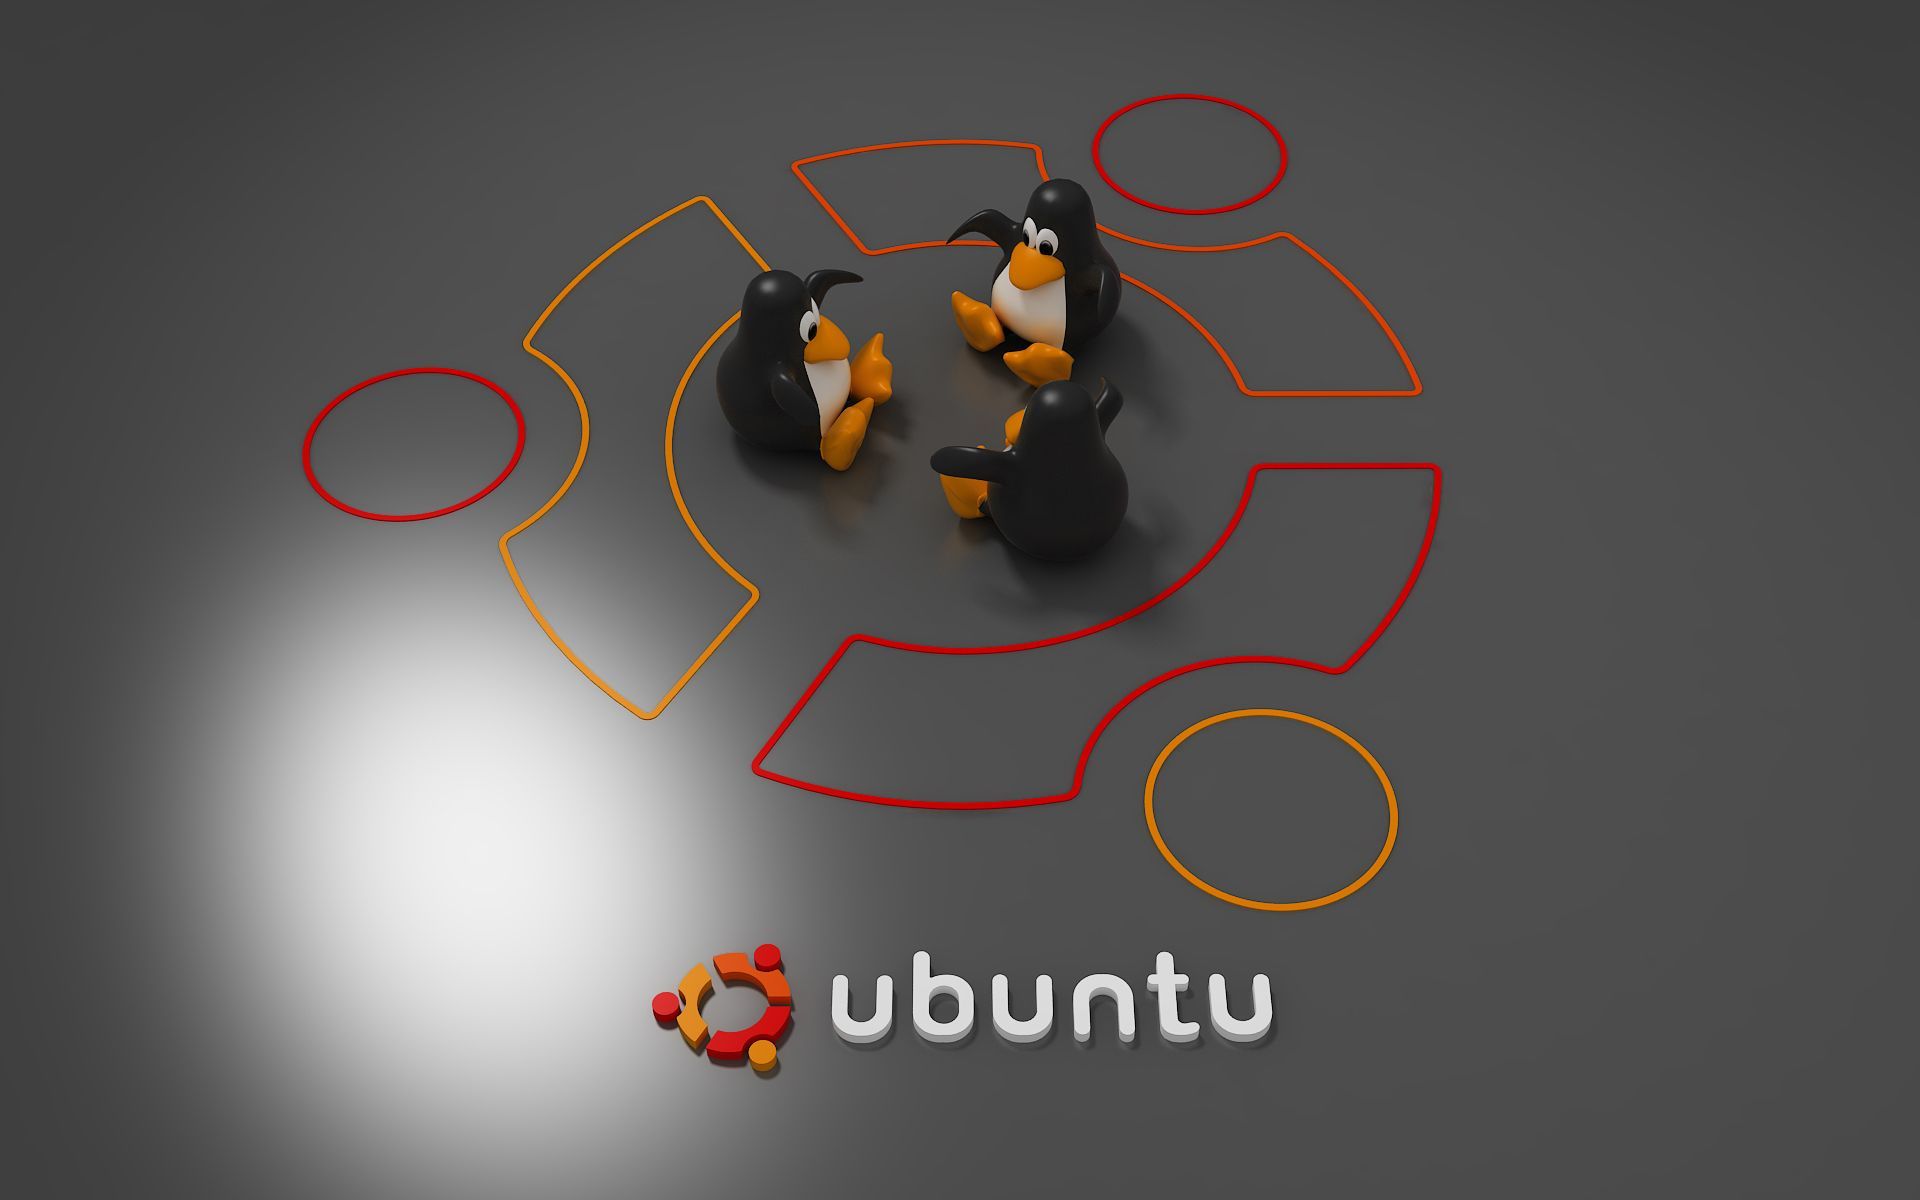 Best Ubuntu Backgrounds